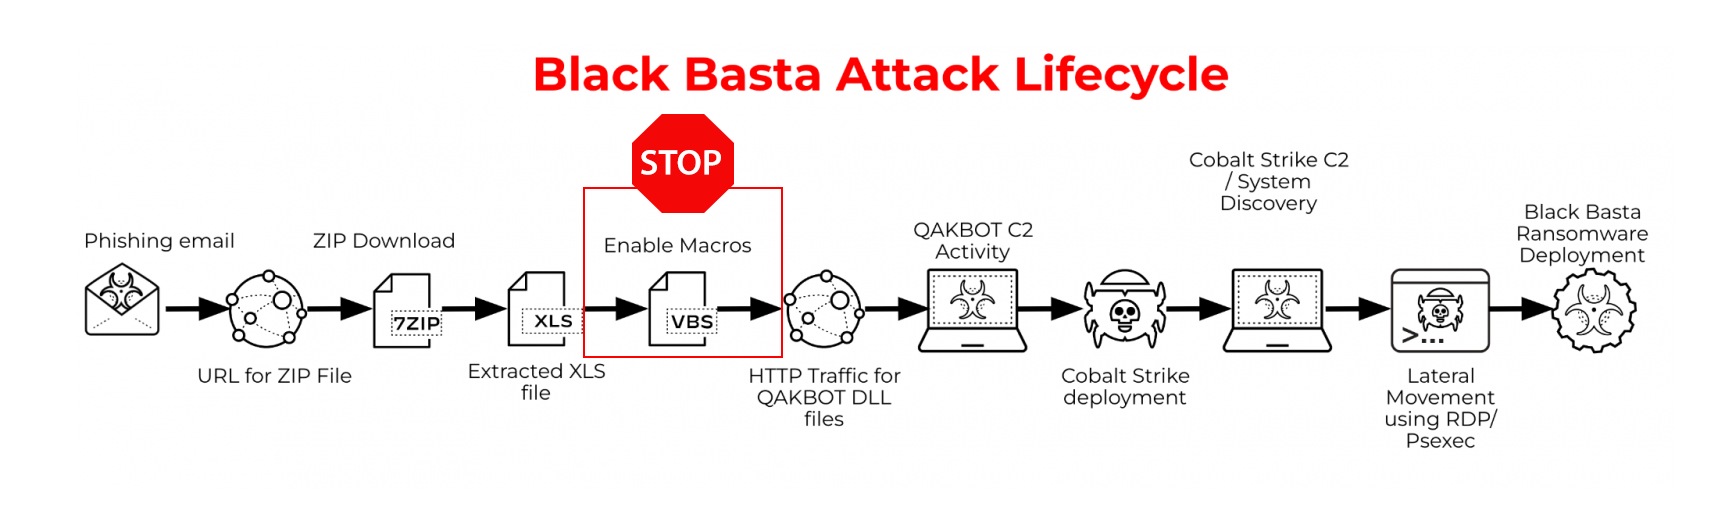 blackbasta-attack-cycle-stop